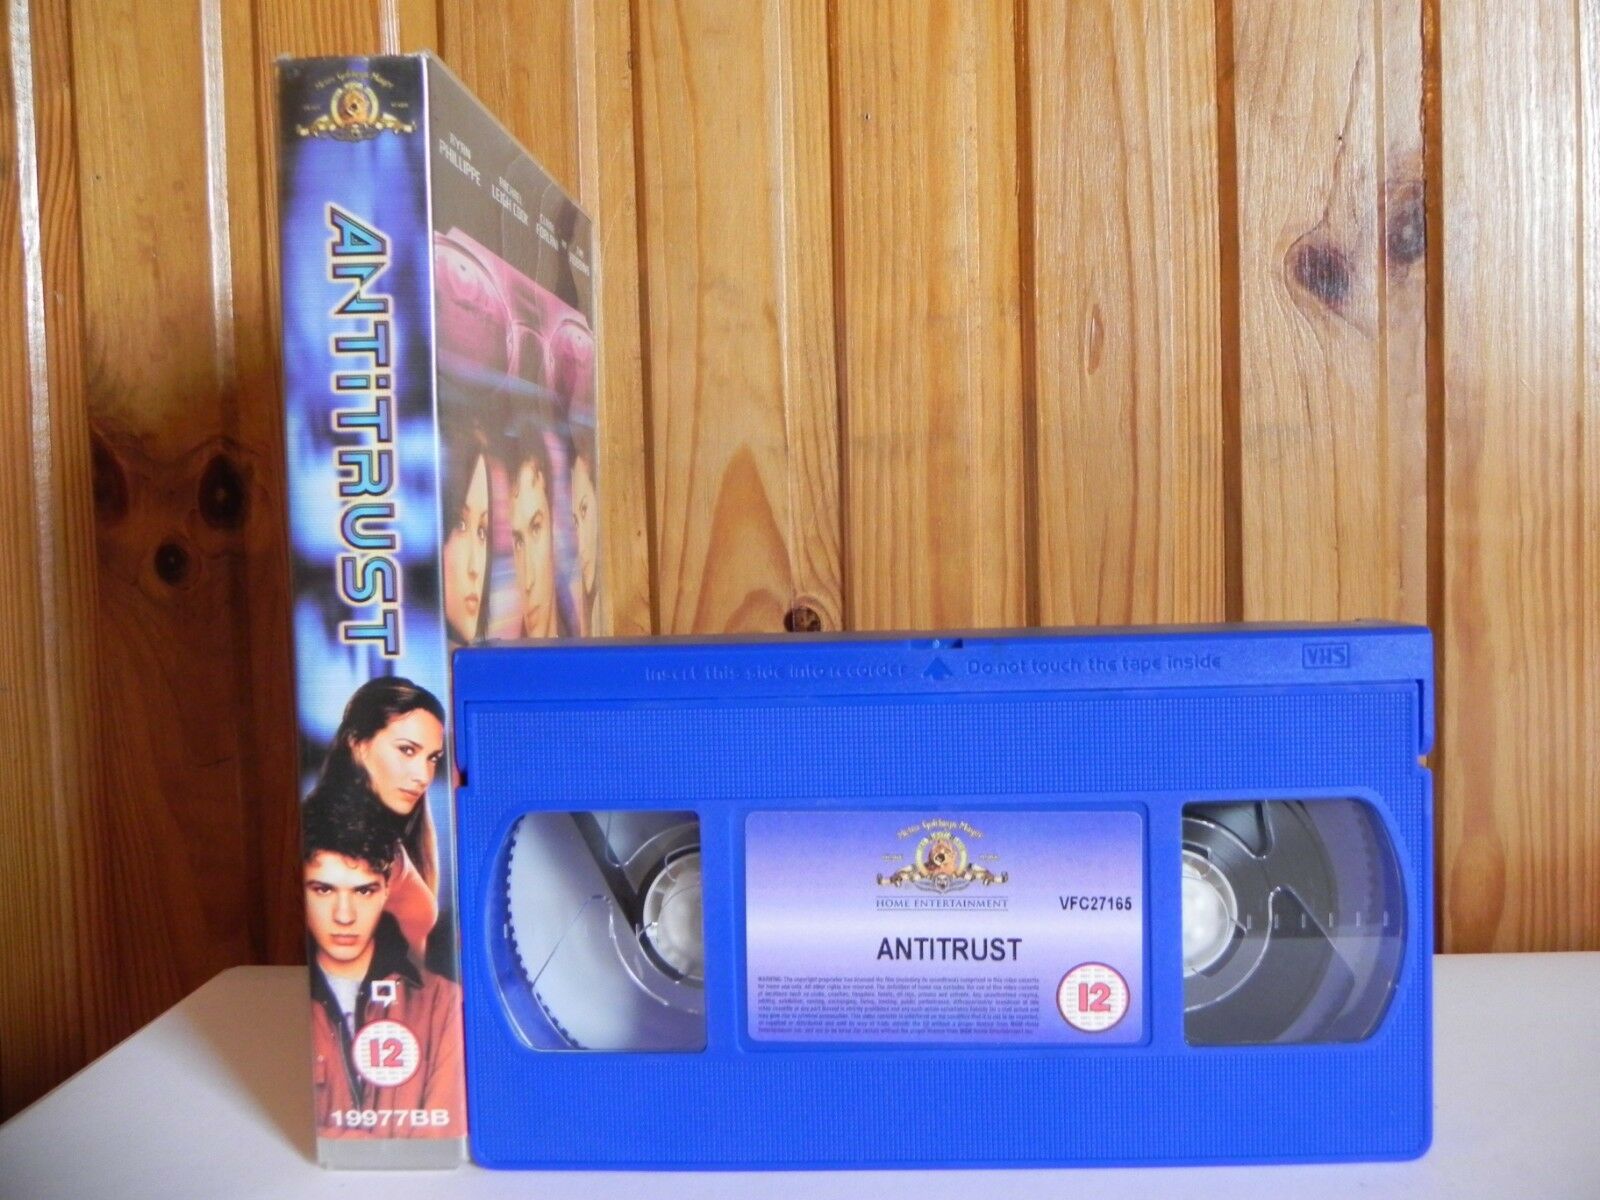 Antitrust - Thriller - Ex-rental - Ryan Phillippe - Tim Robbins - Big Box - VHS-